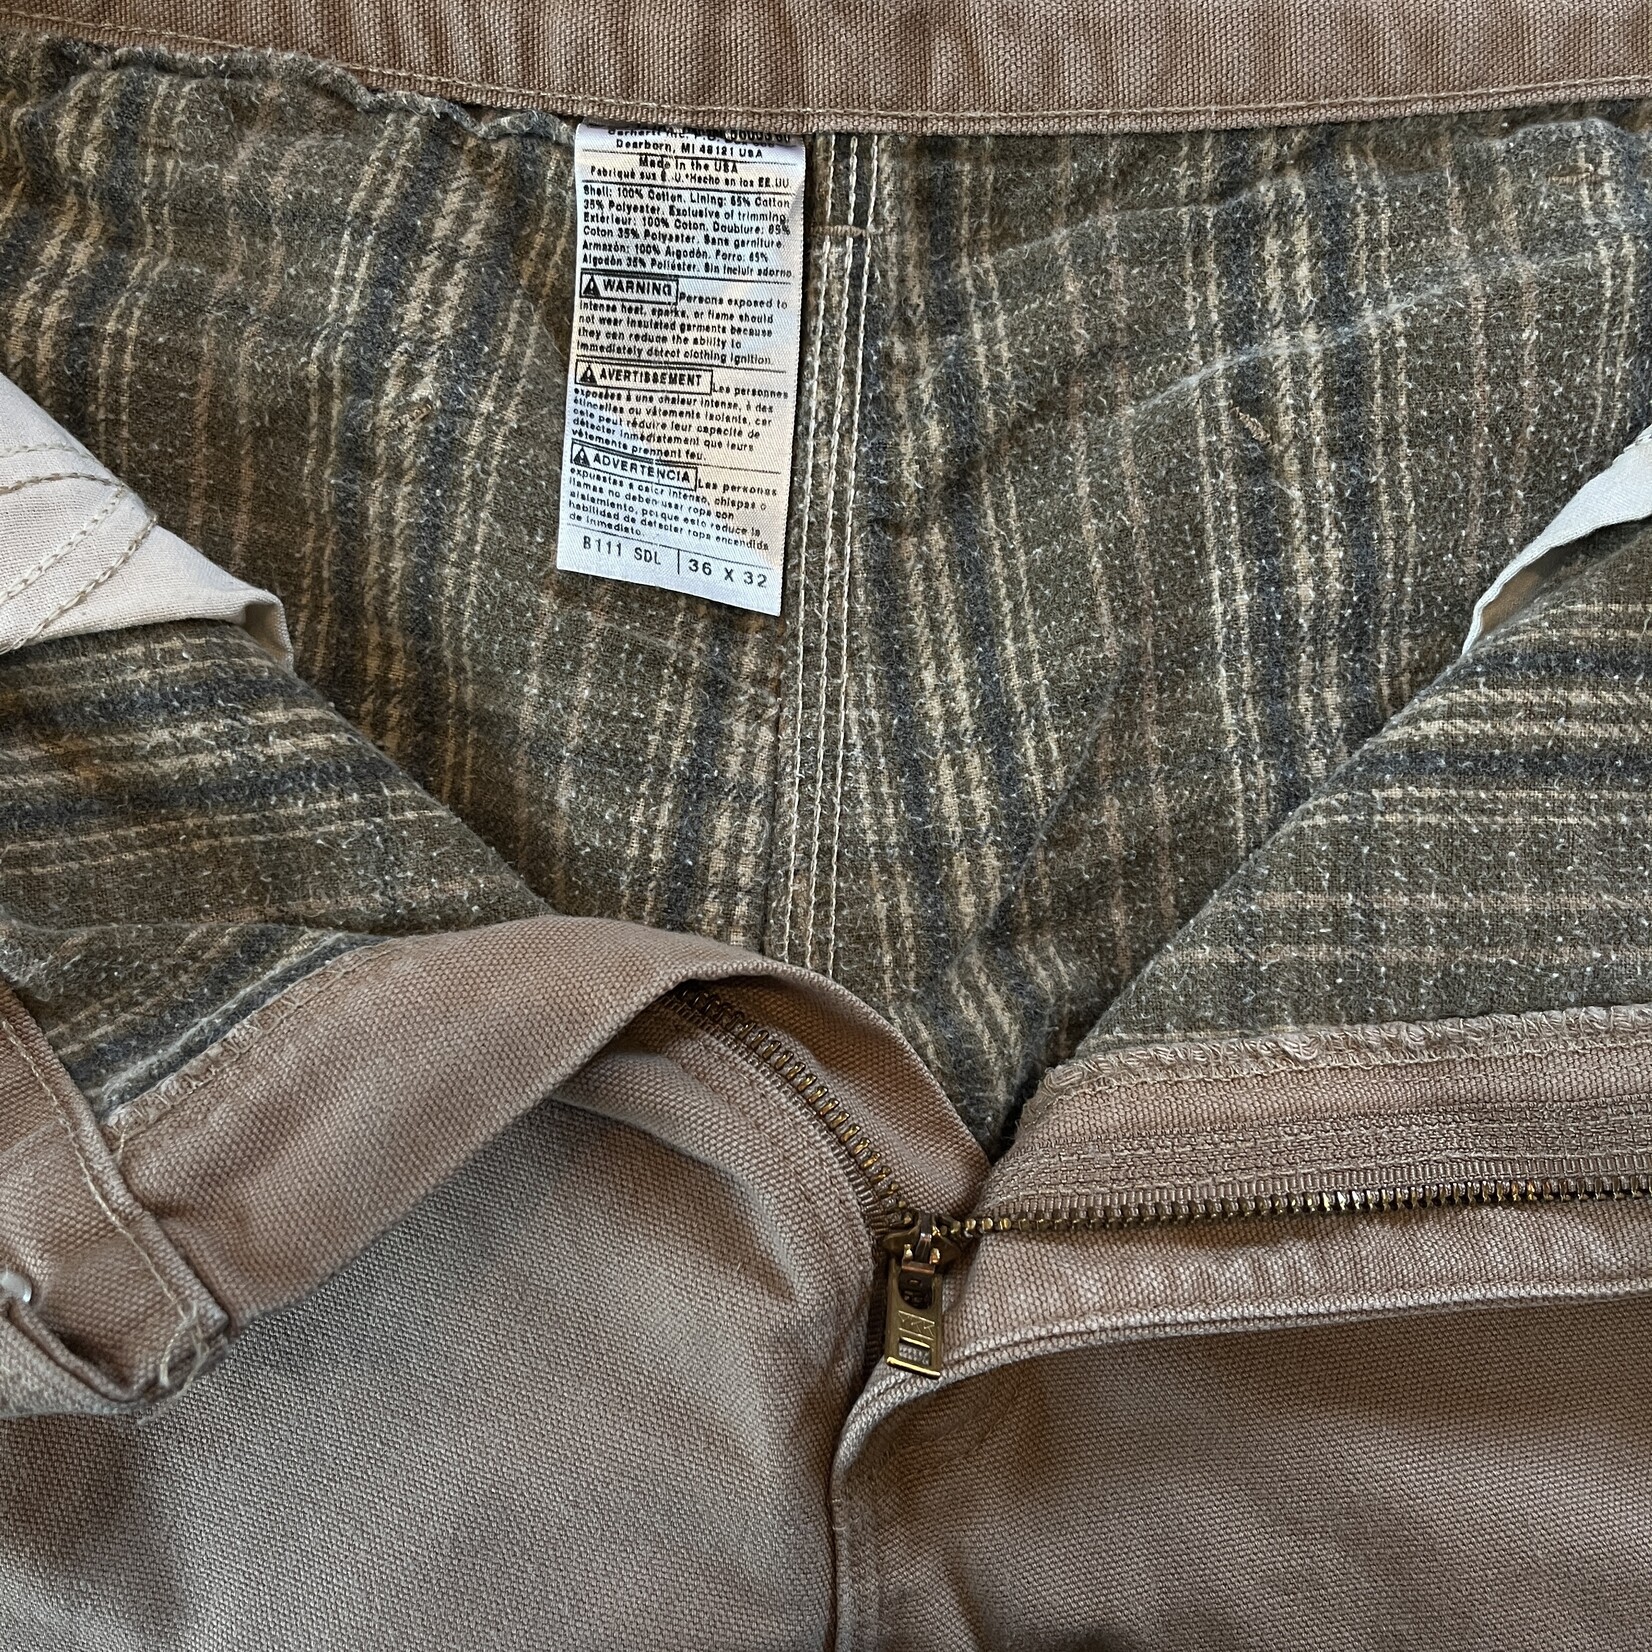 13720	carhartt flannel lined pants sz. 36 x 30